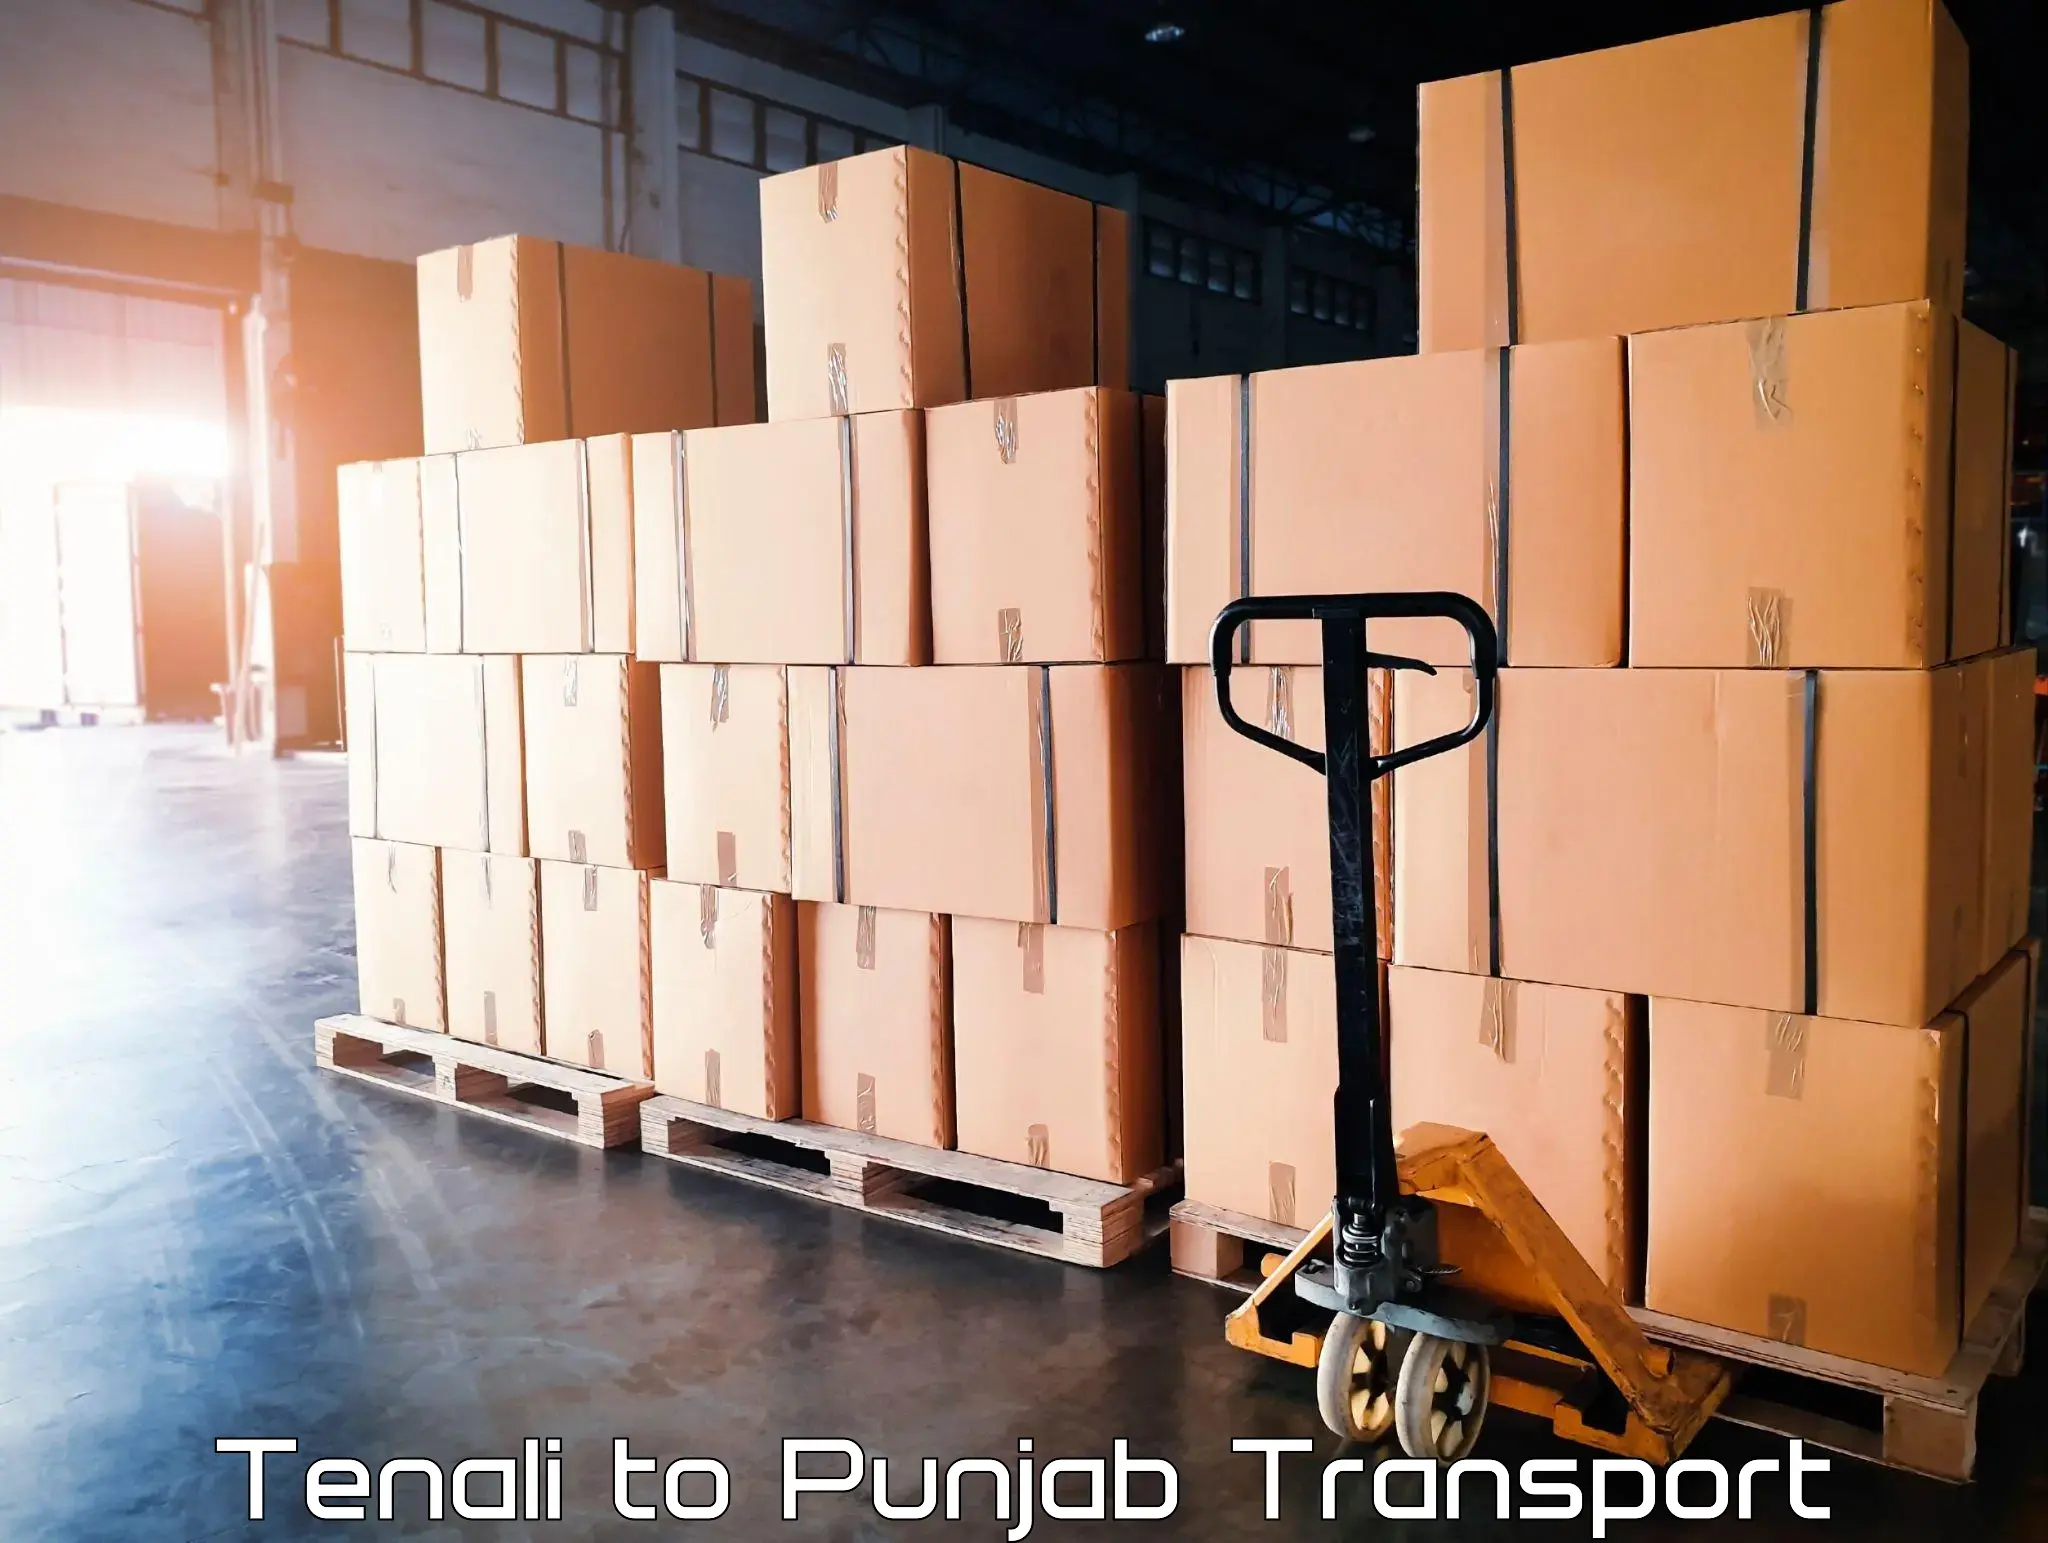 Bike transport service Tenali to Punjab